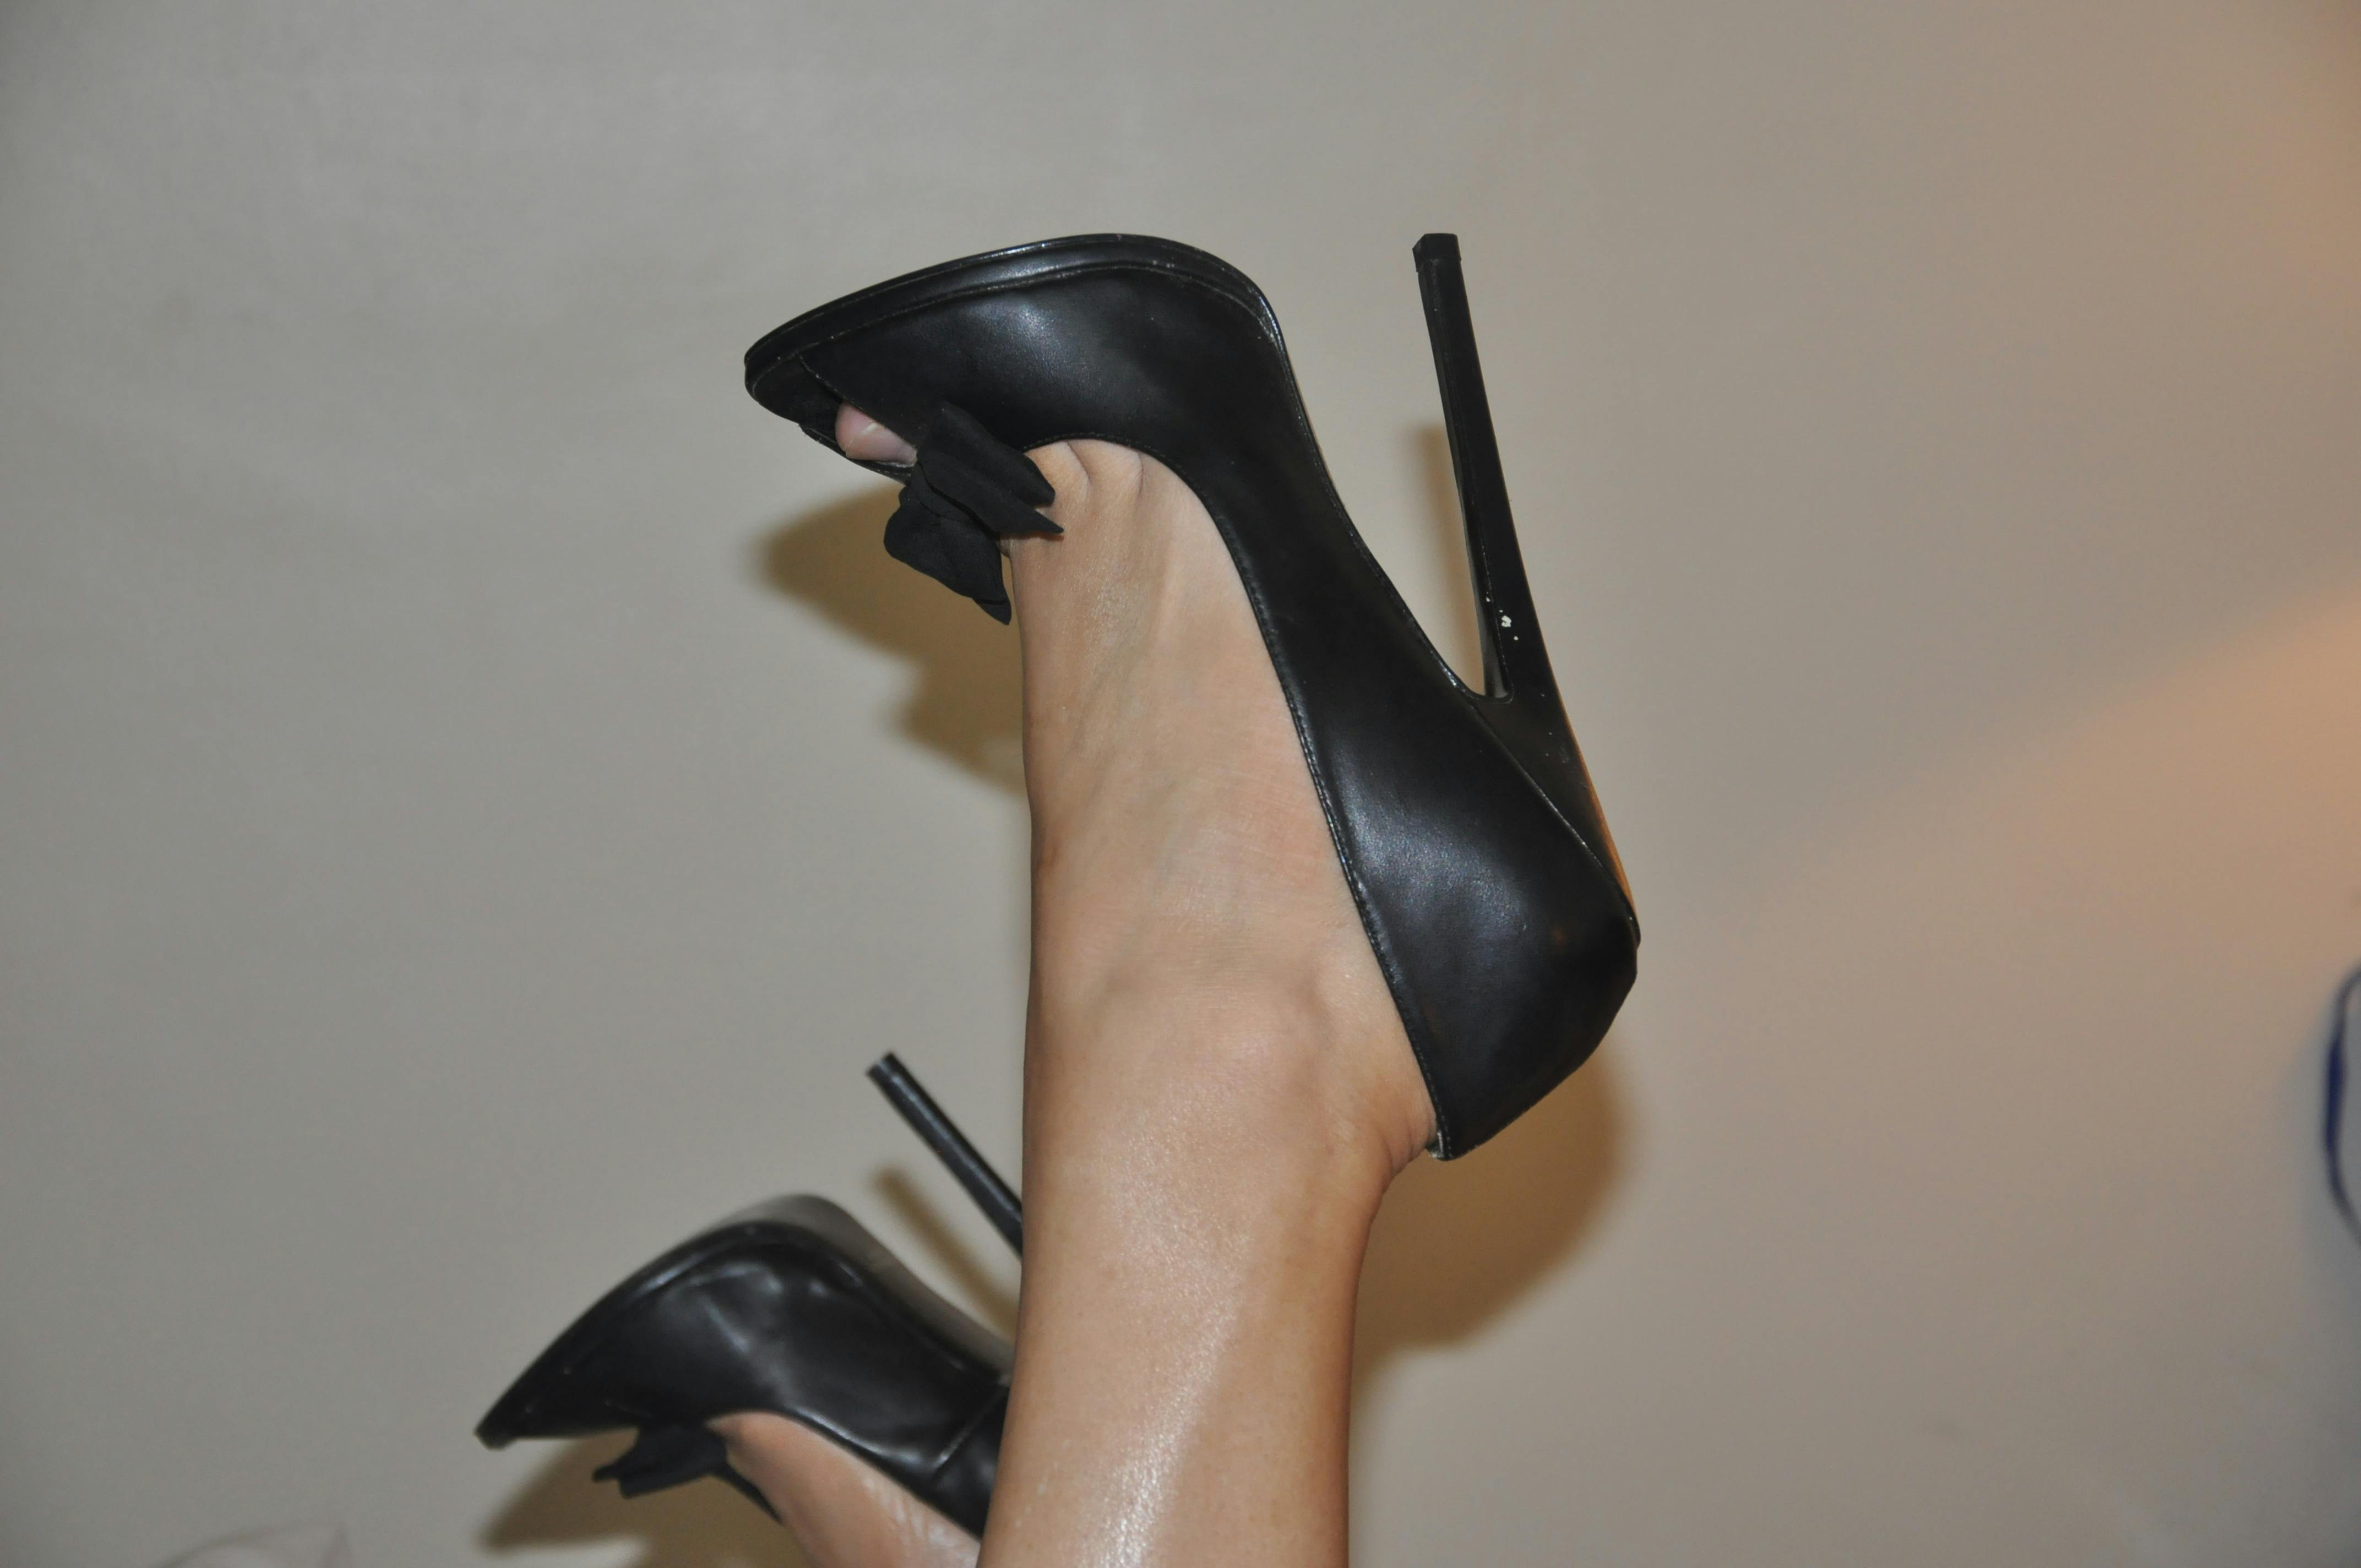 Free stock photo of Sexy High heel